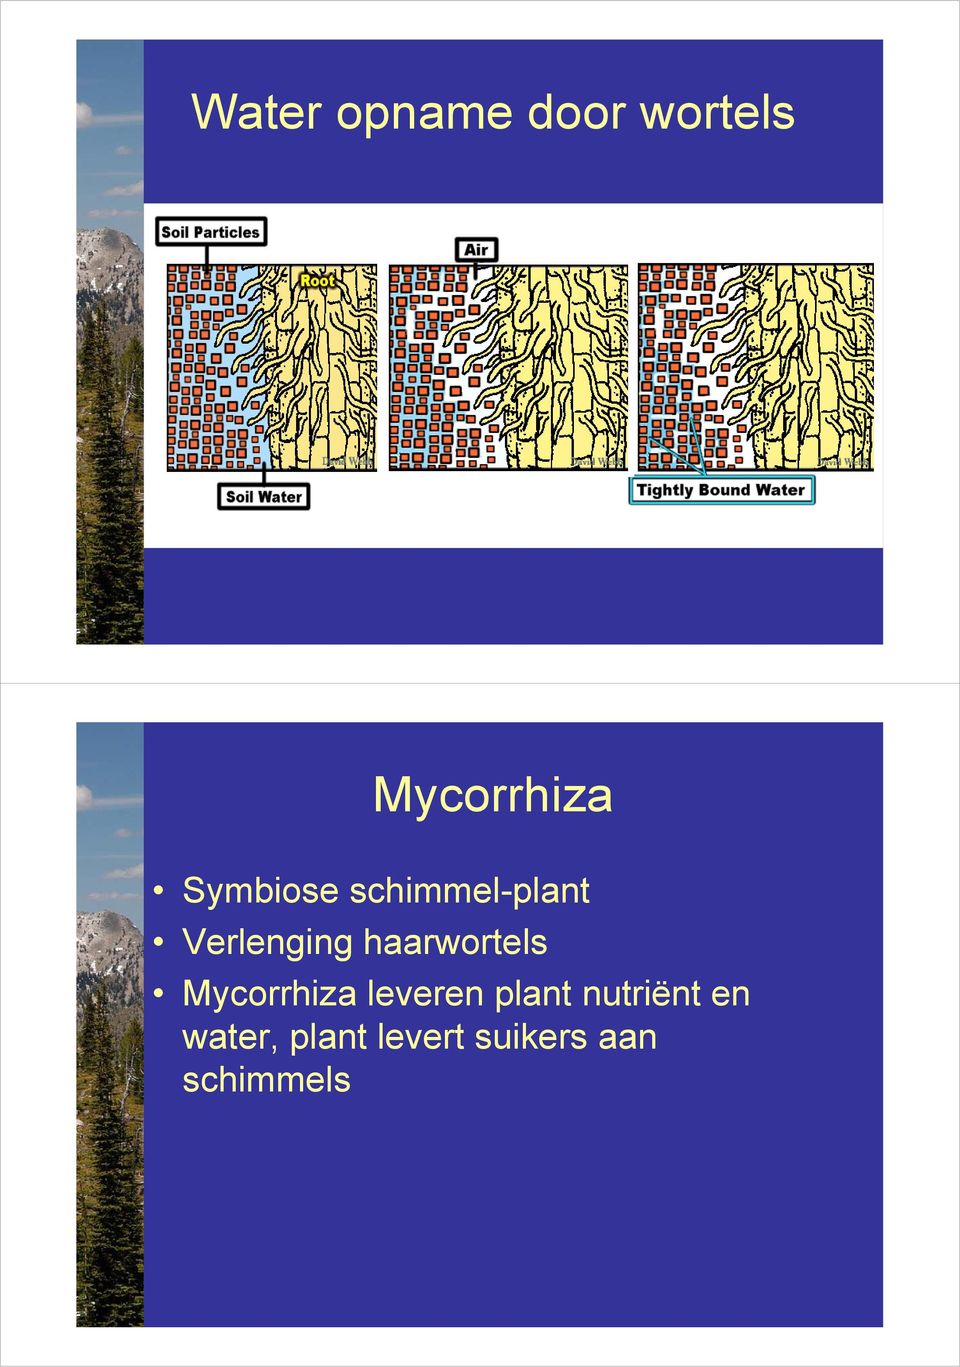 haarwortels Mycorrhiza leveren plant